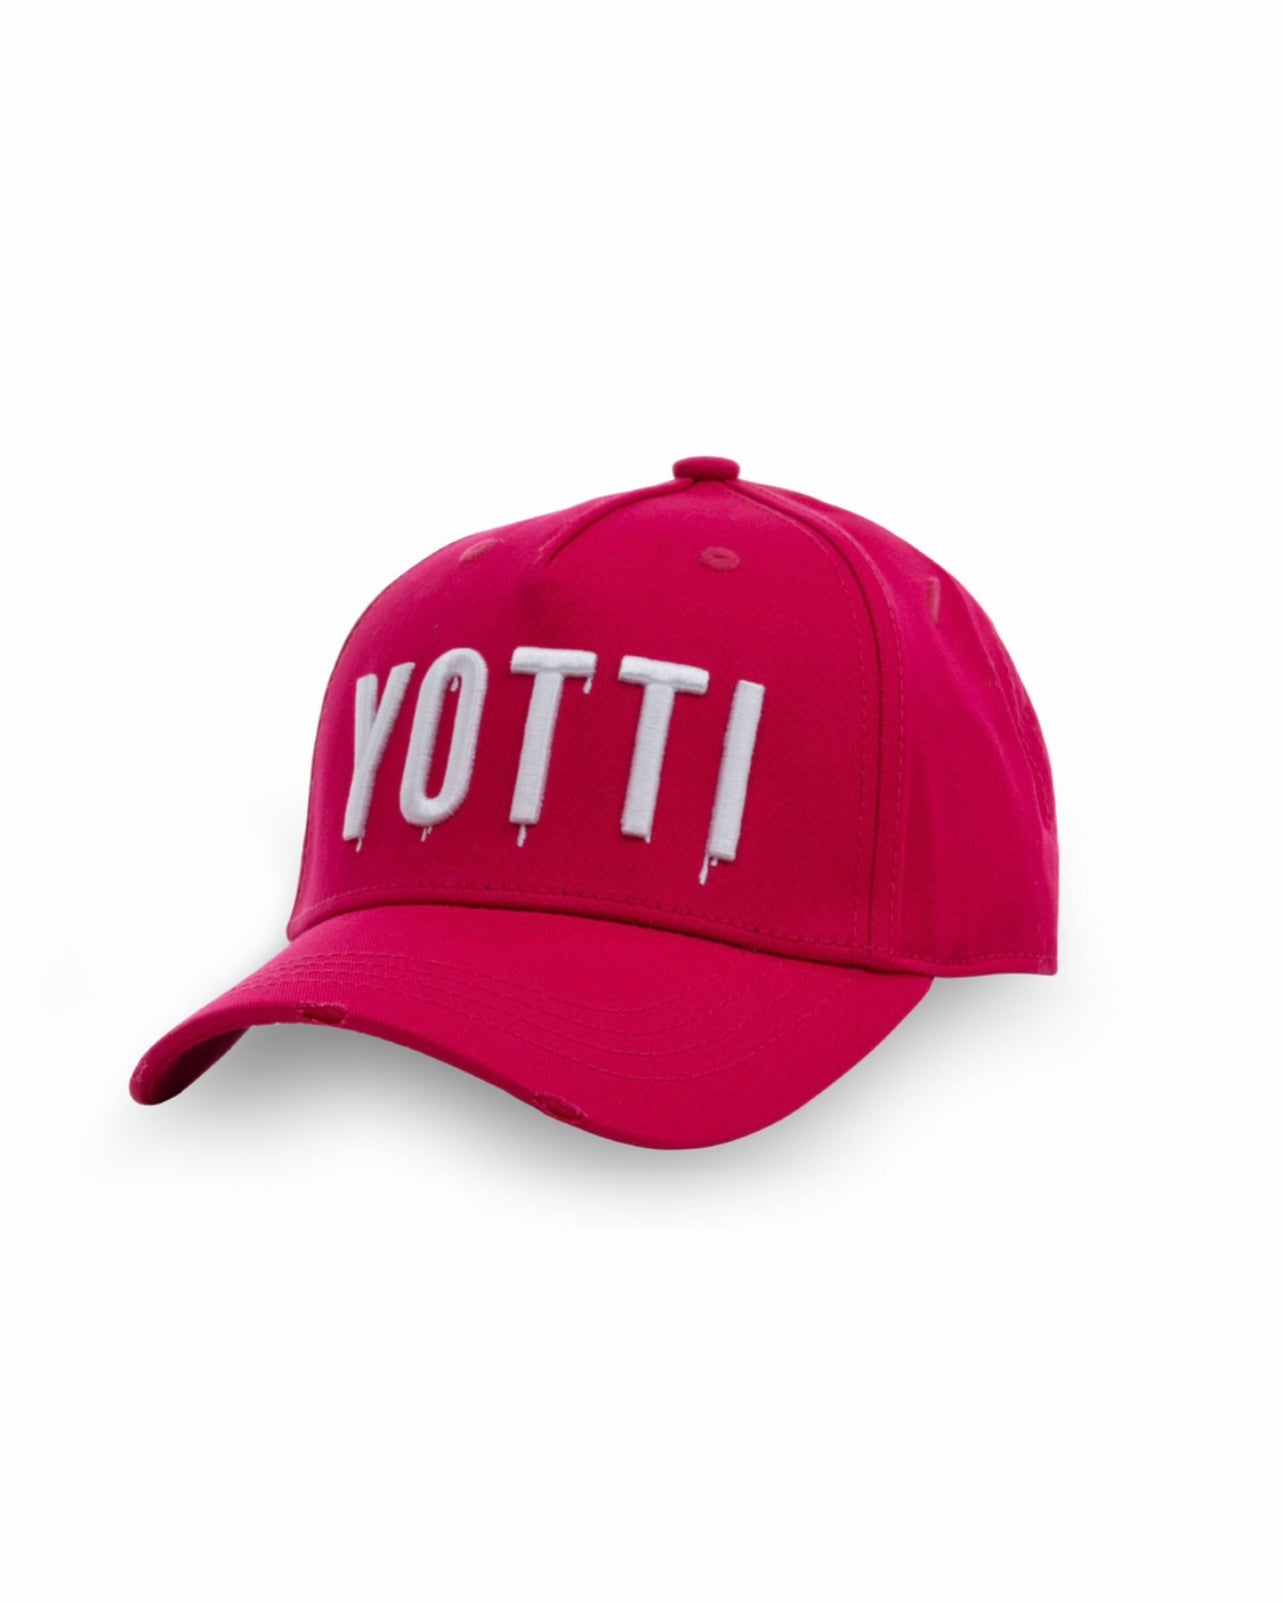 Yotti Distressed Cap | Pink Magenta